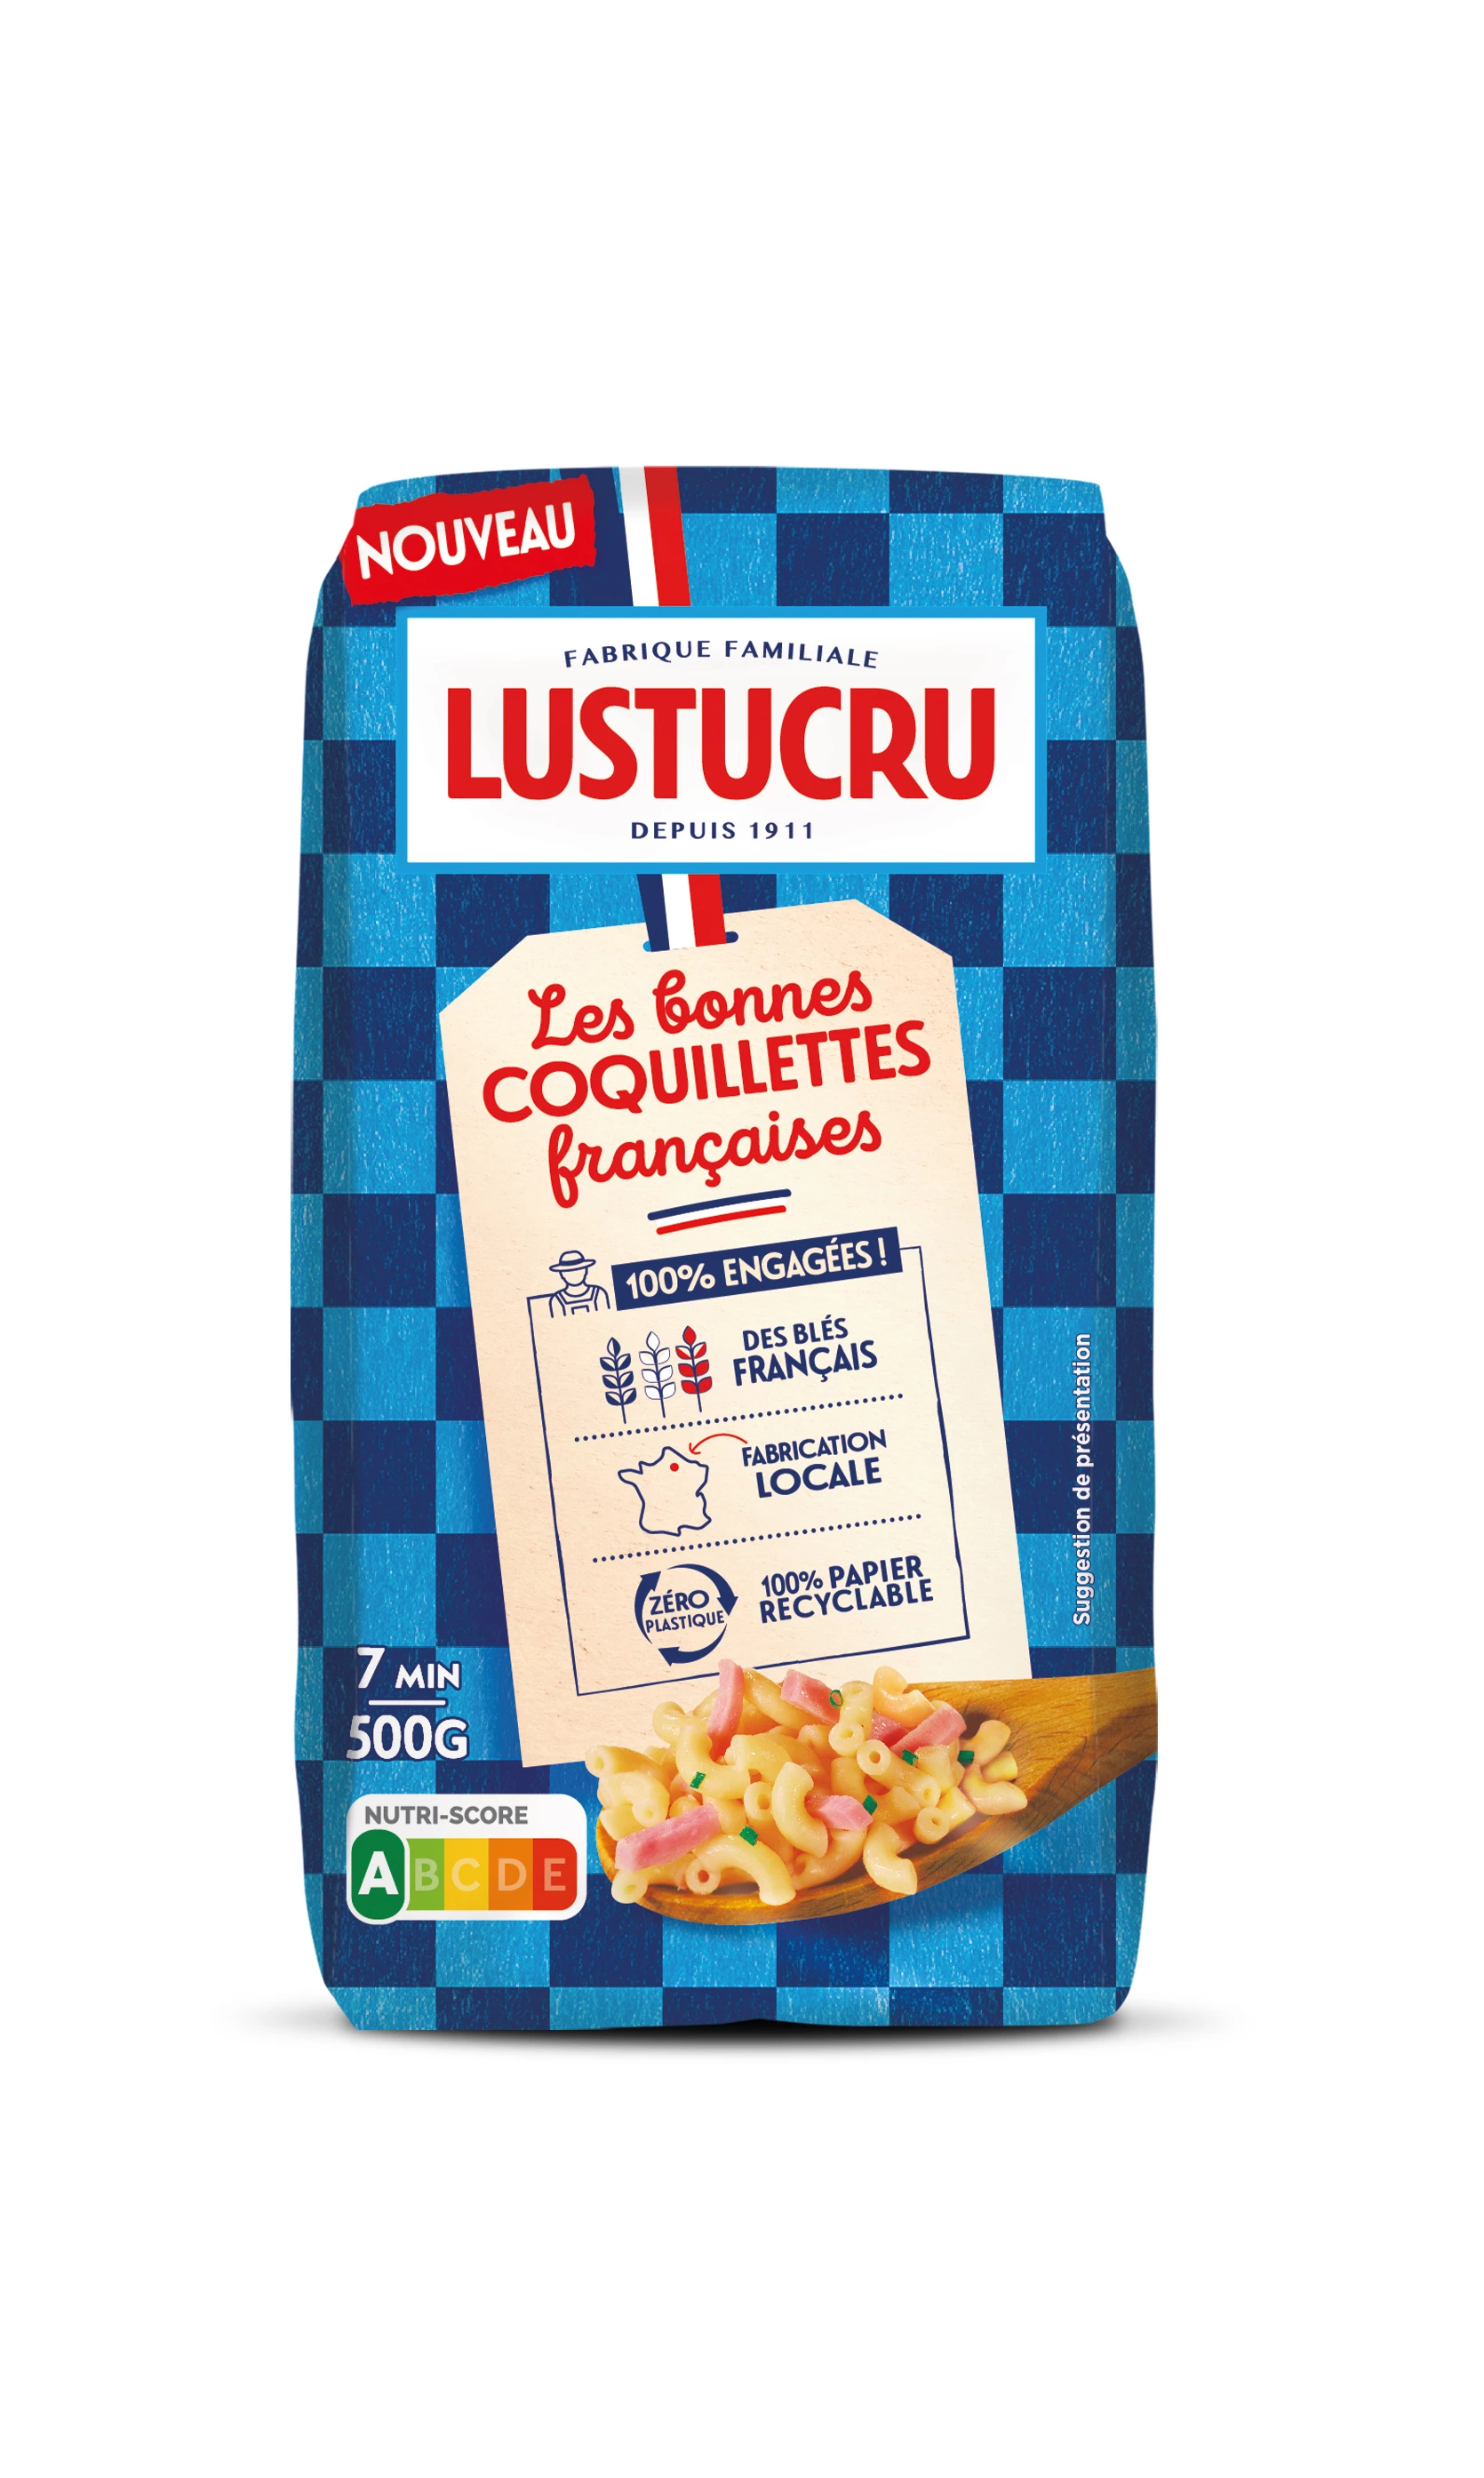 Pasta Coquillette, 500g - LUSTUCRU